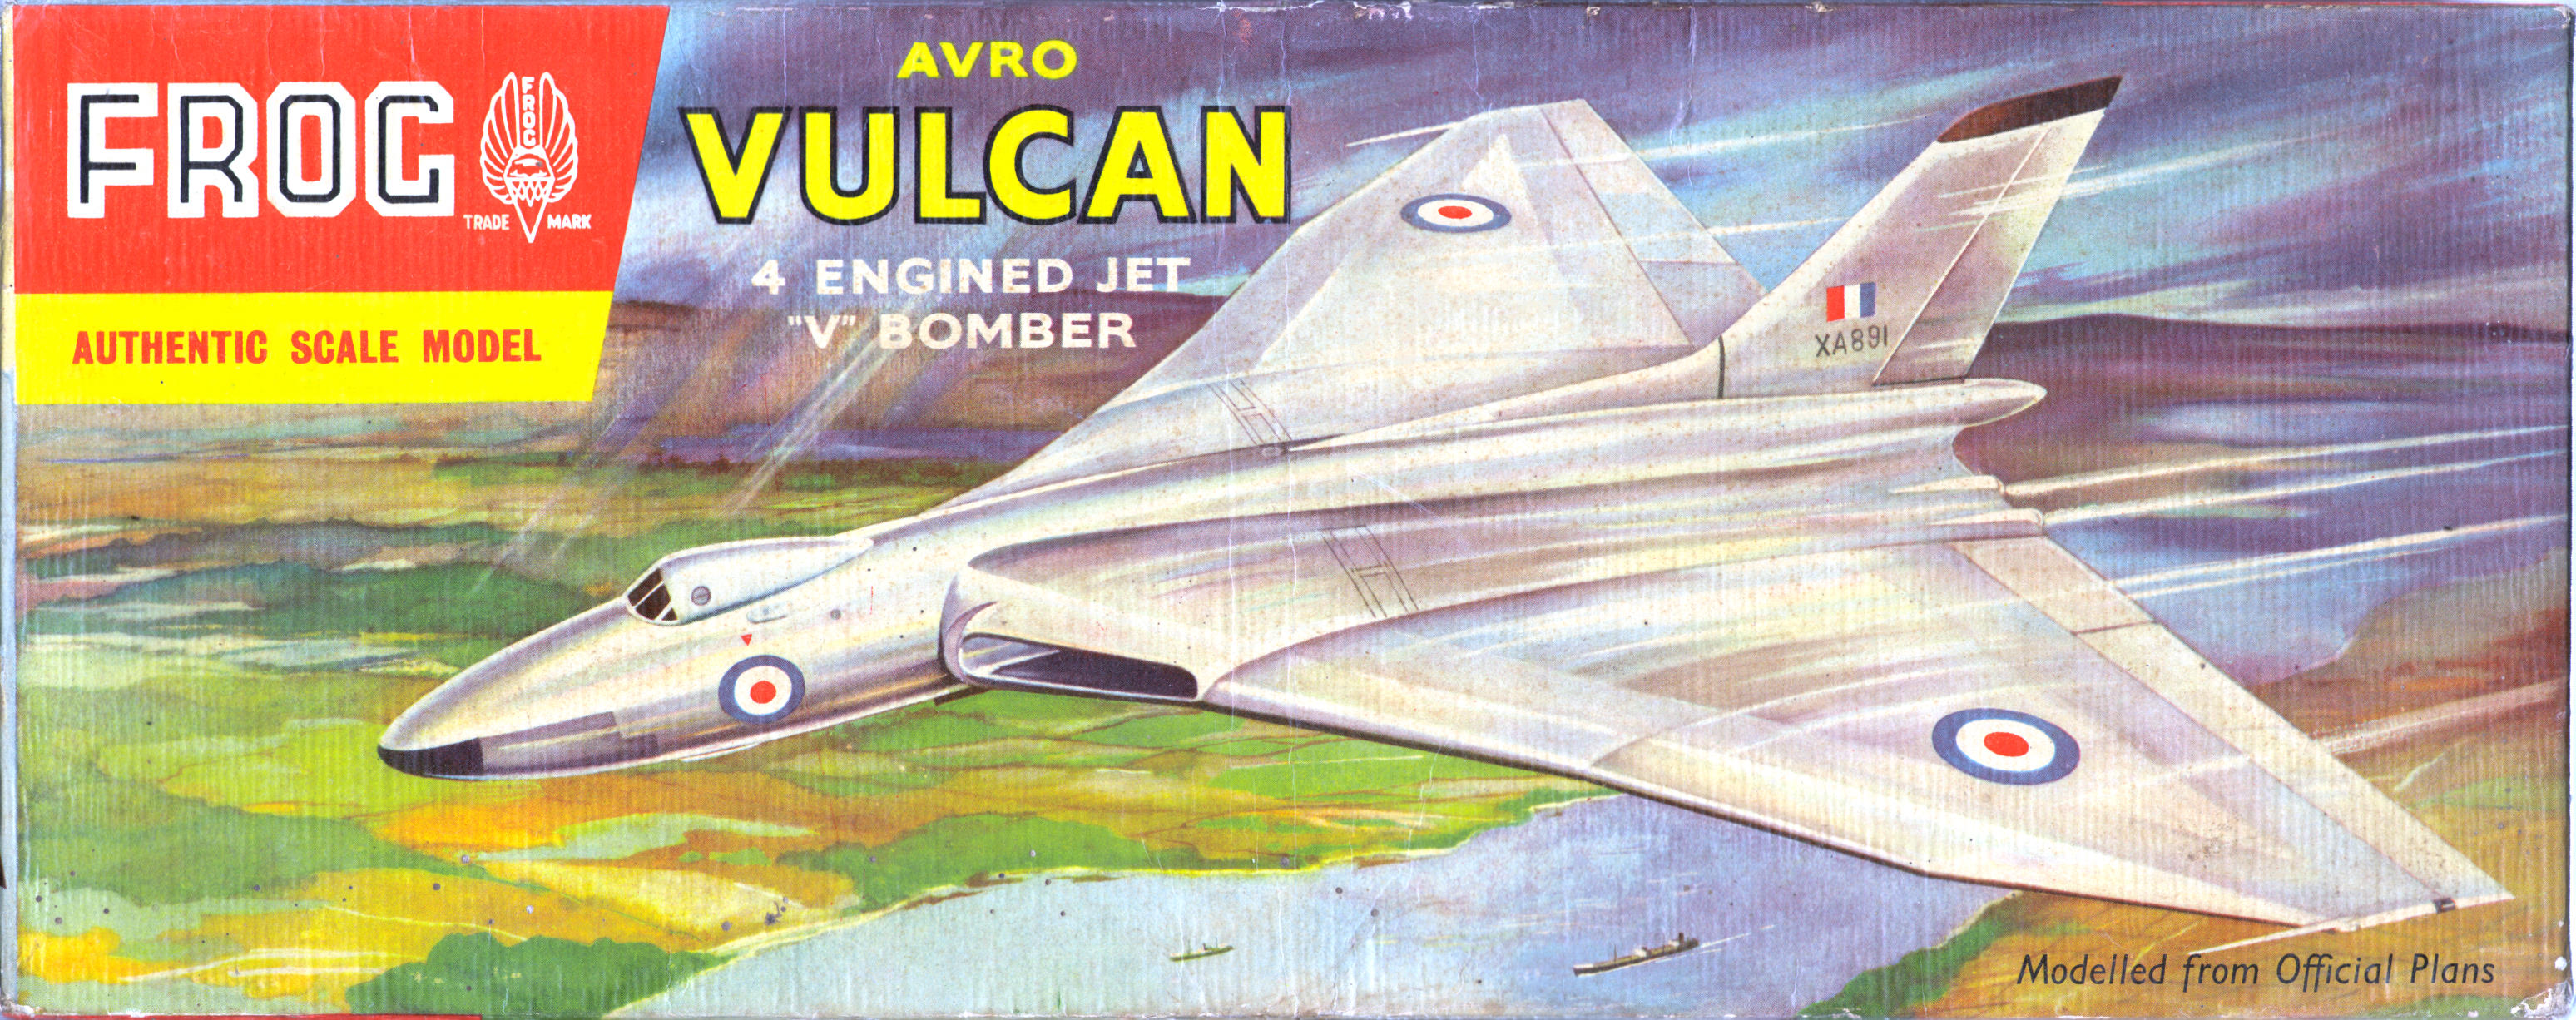 Коробка FROG 354P ima AVRO Vulcan 4 engined jet V-bomber, IMA, 1958